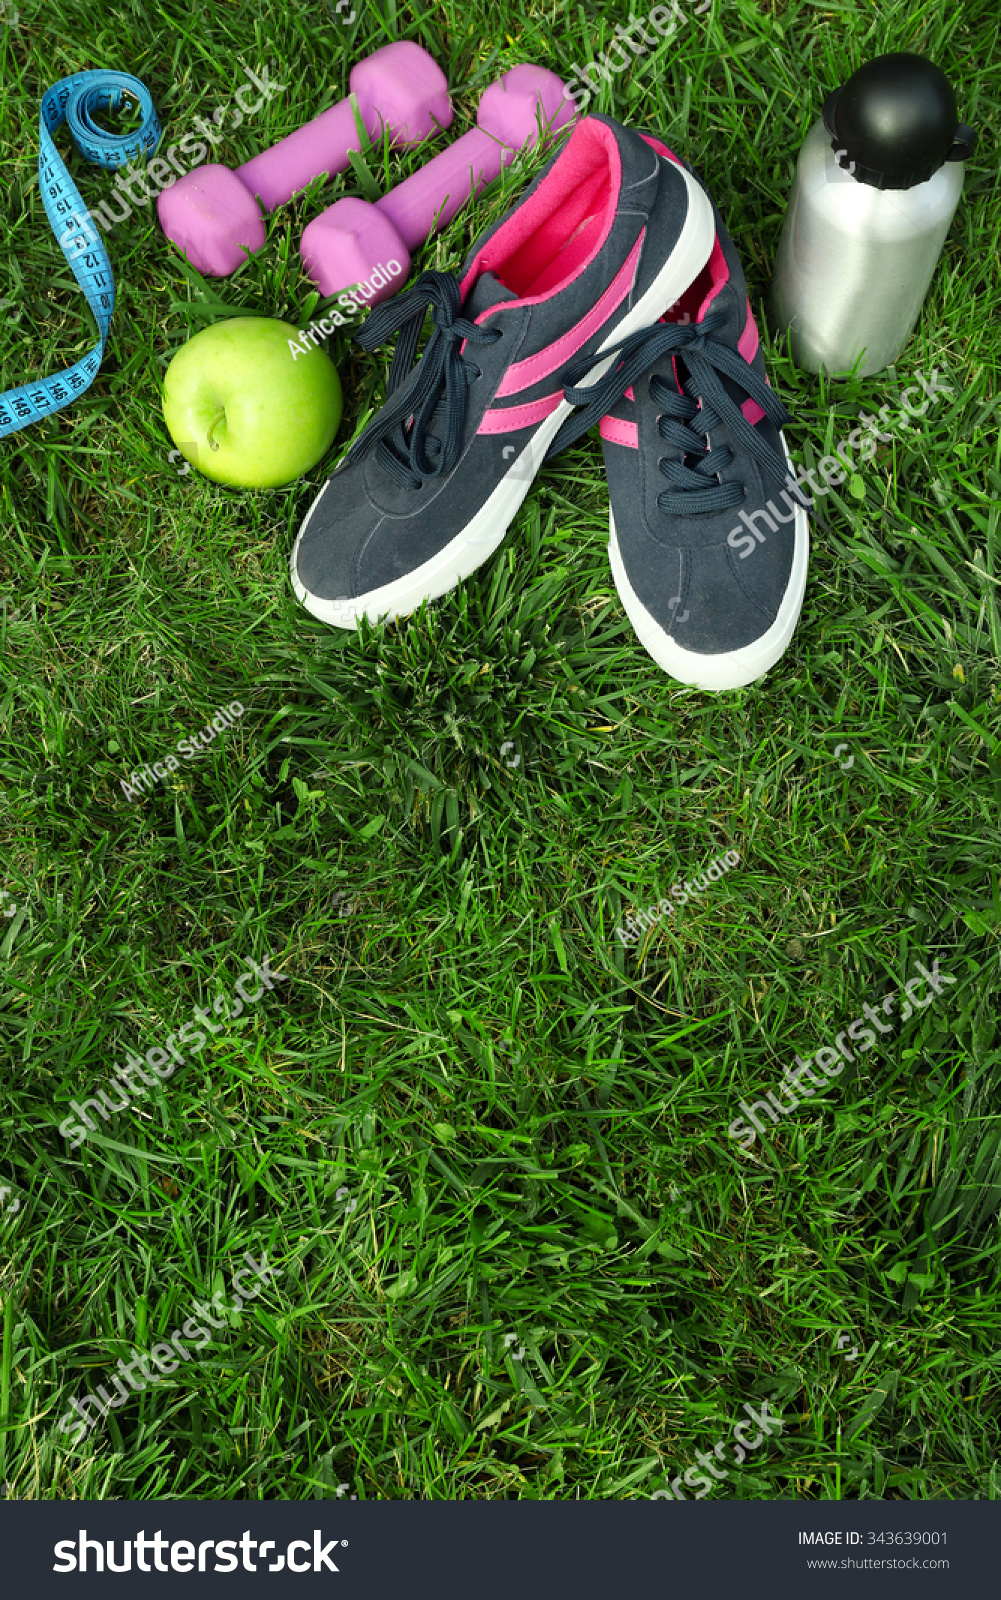 sports equipment on green grass background #343639001